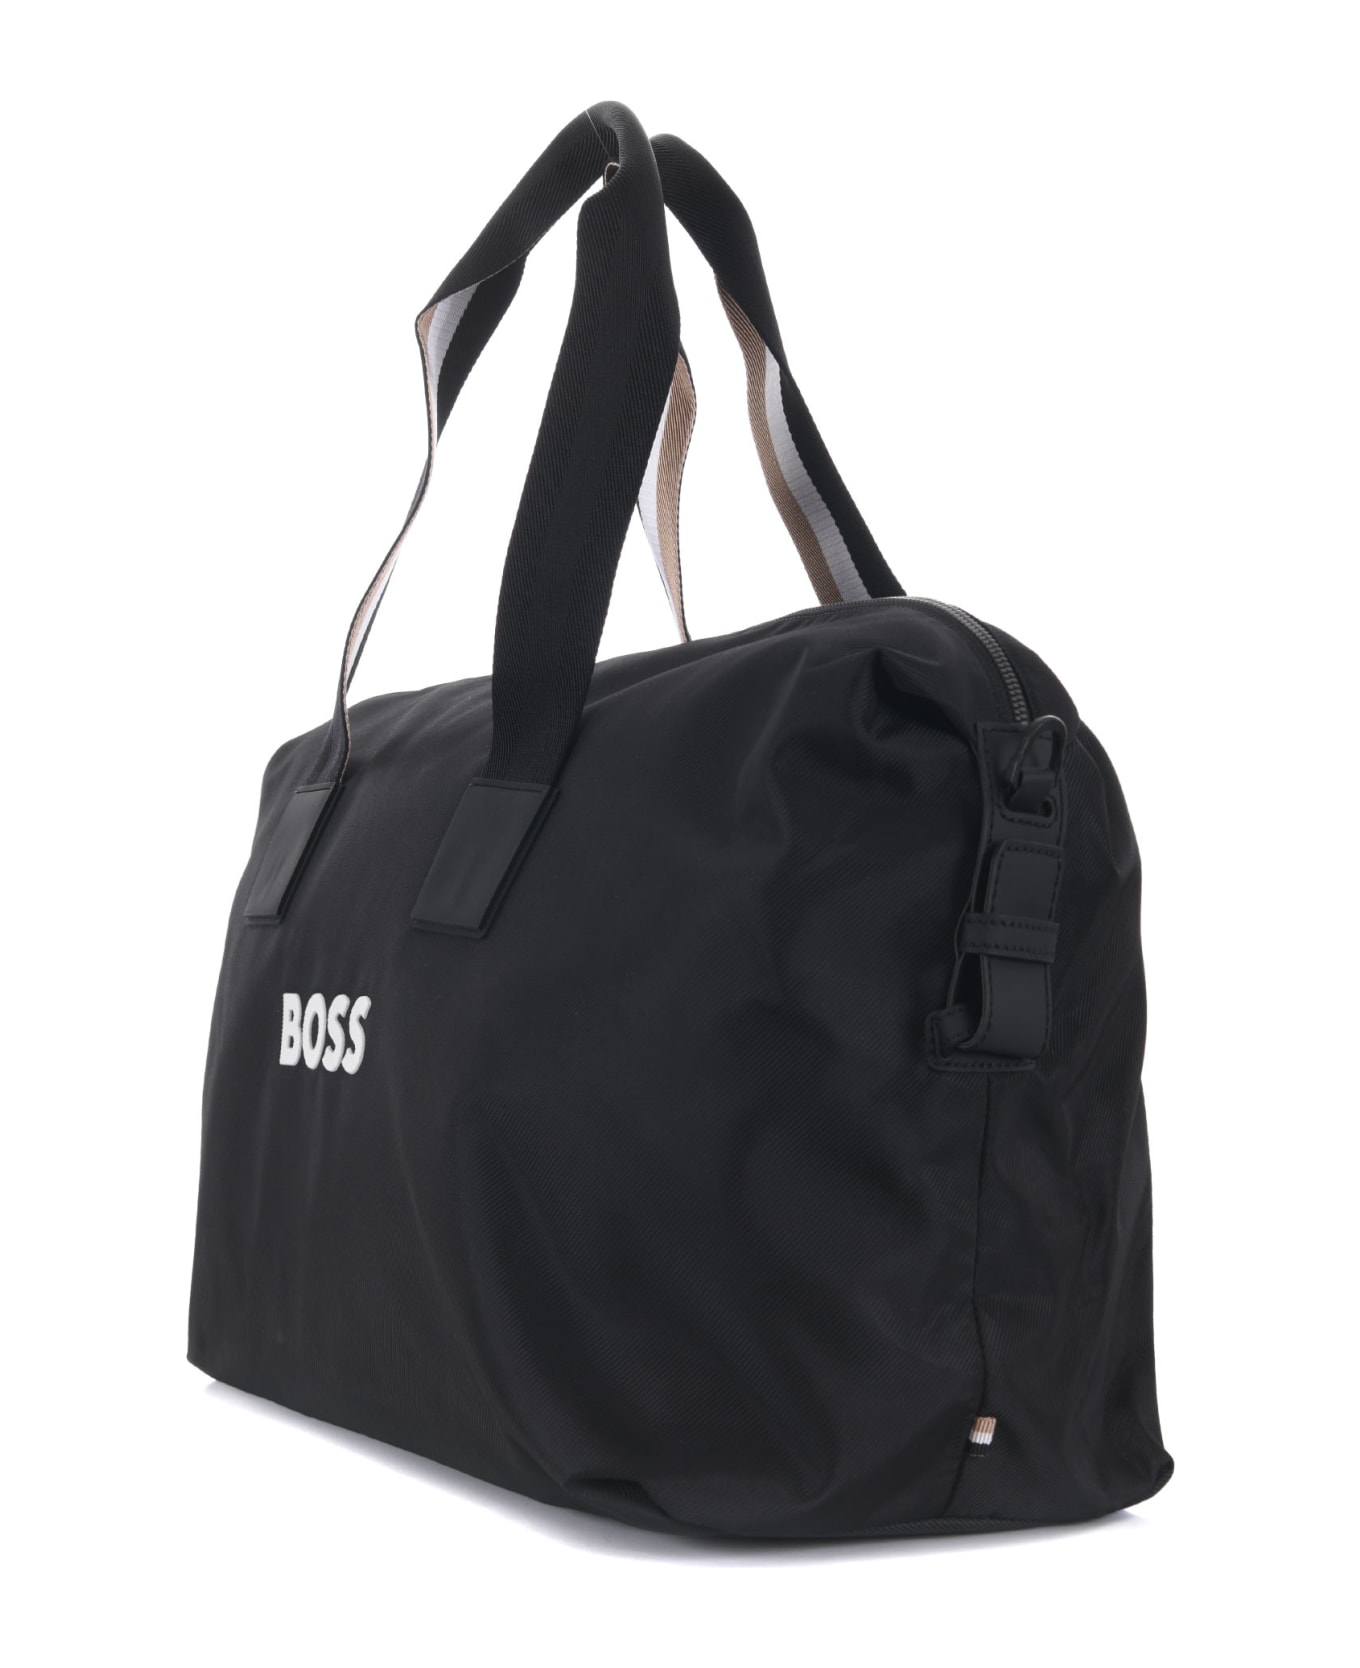 Hugo Boss Boss Daffle Bag - Nero